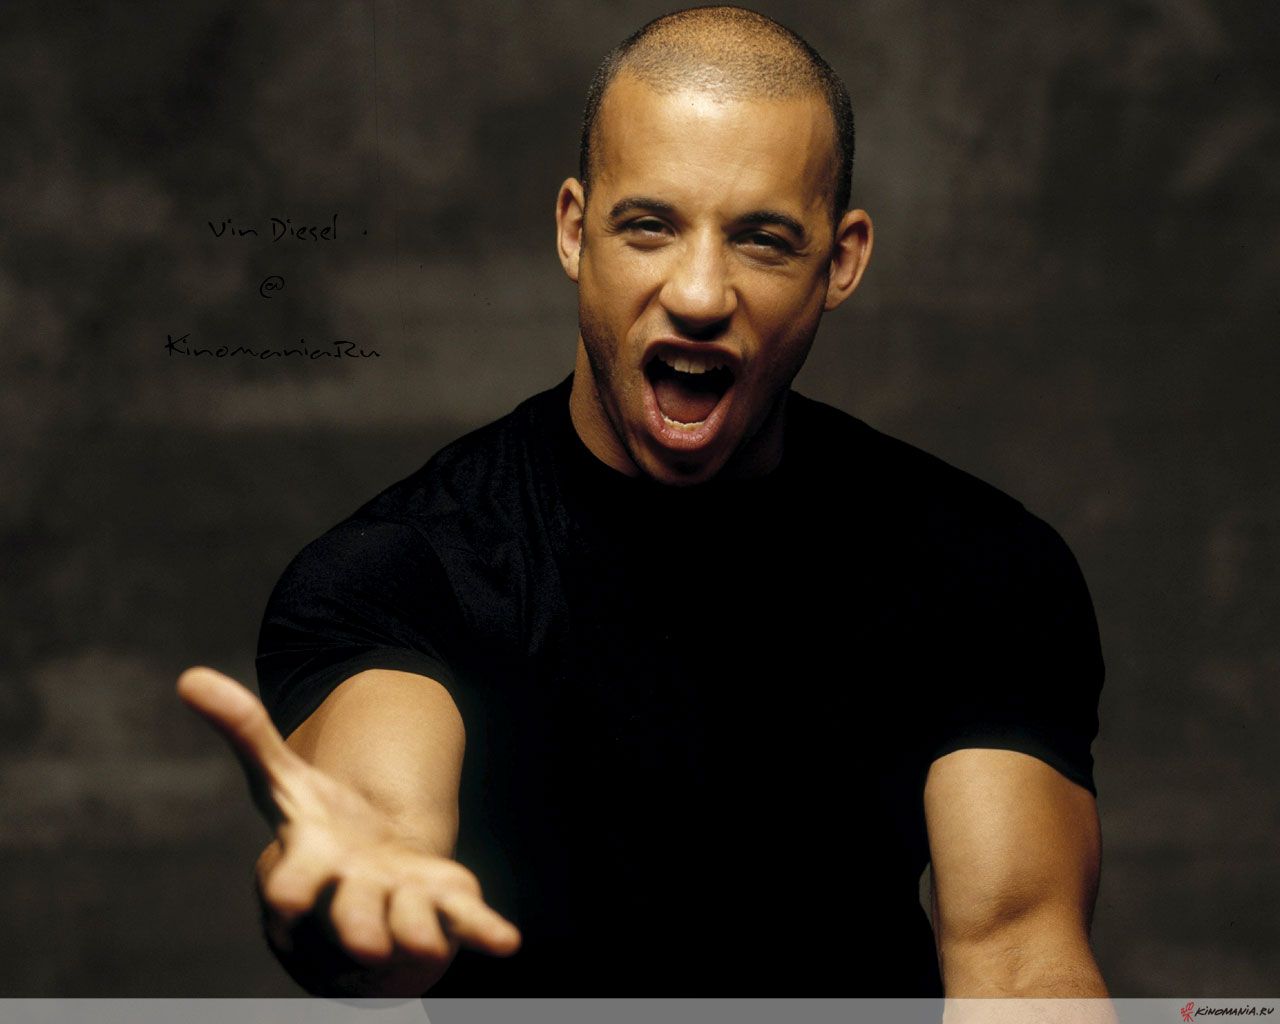 Wallpapers Vin Diesel Celebrities Image #227986 Download